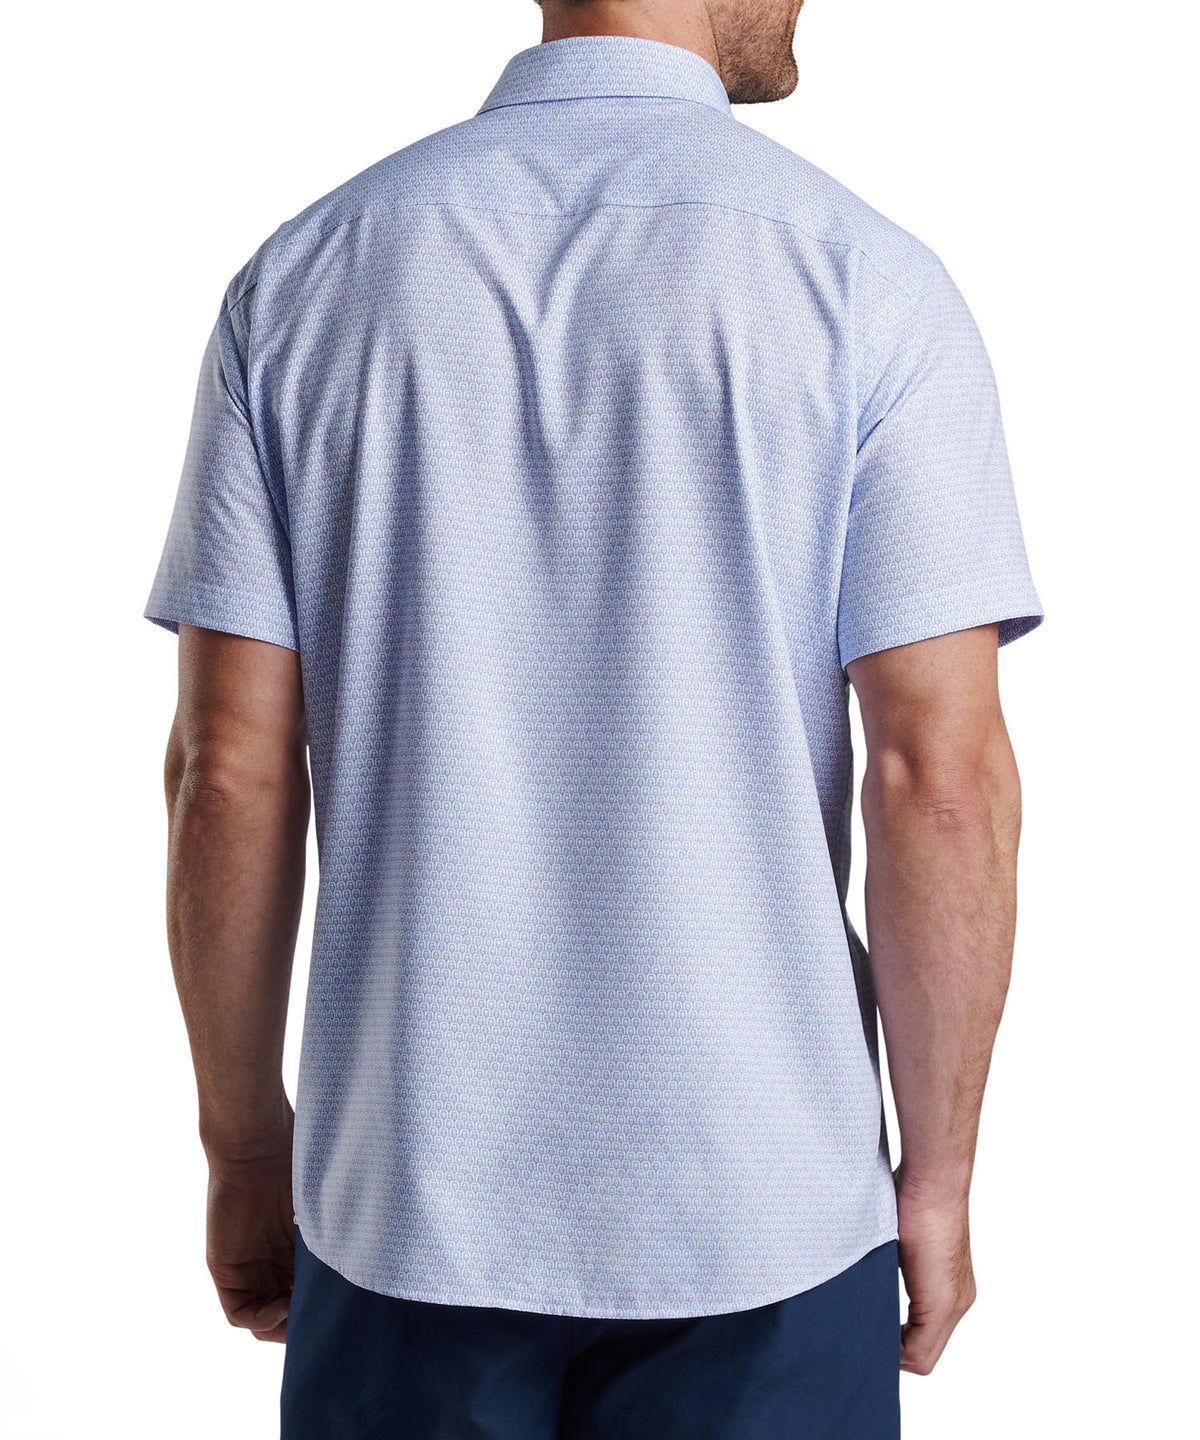 Peter Millar Wine Print Short Sleeve Spread Collar Sport Shirt, Men's Big & Tall